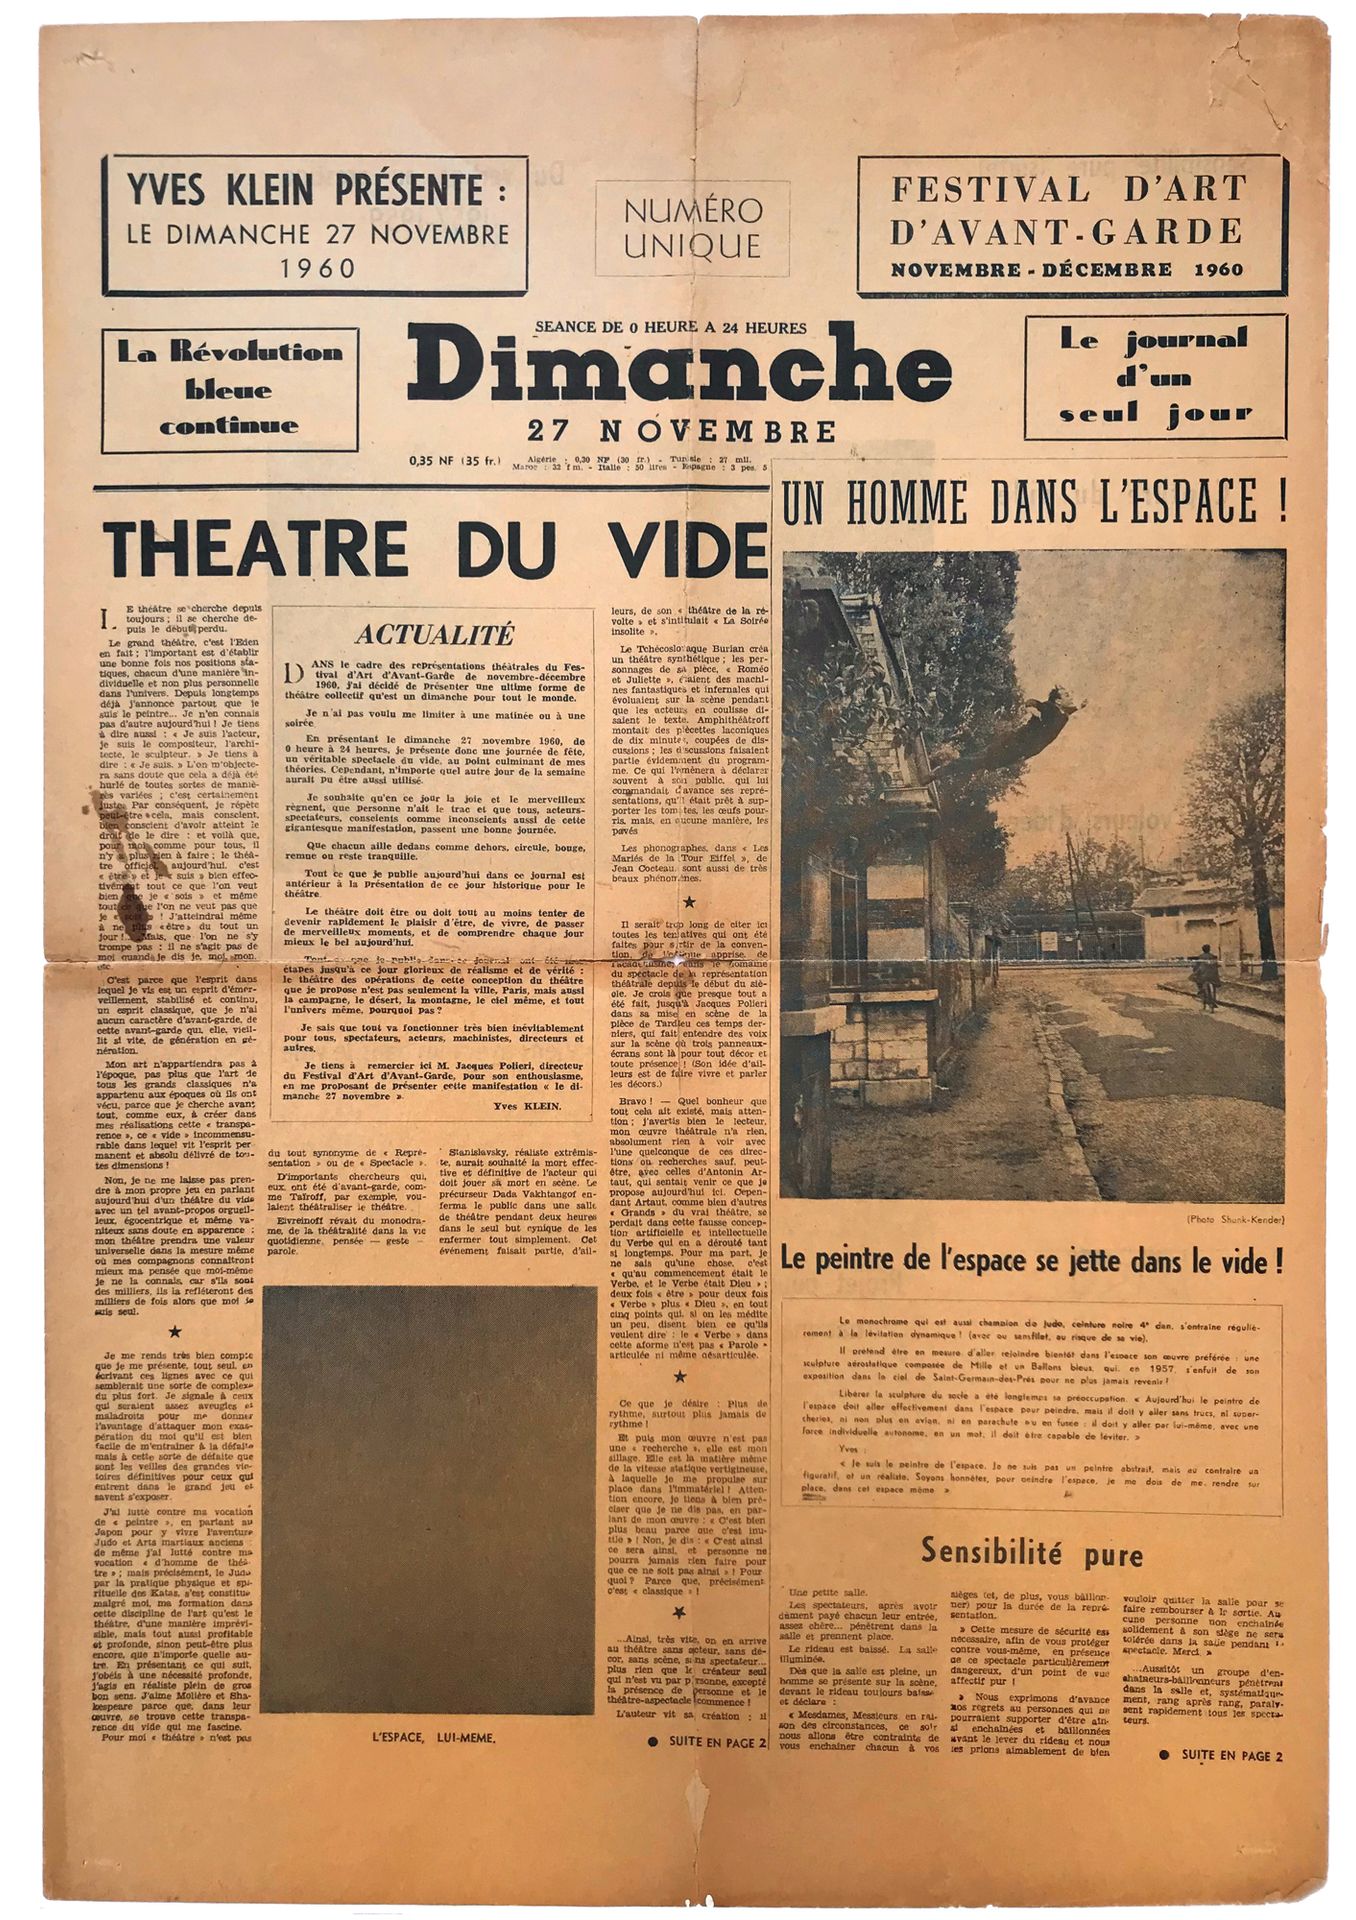 [YVES KLEIN] Le Journal d'un jour, 1960
Copia originale di questo famoso falso d&hellip;